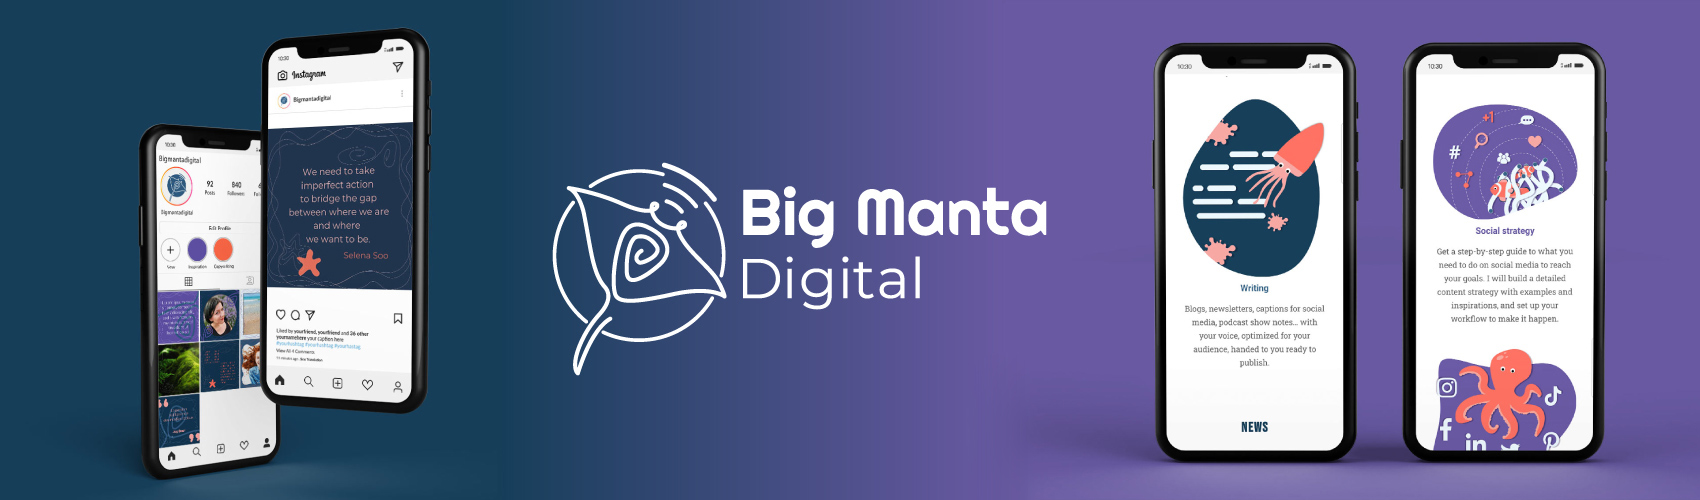 Présentation projet Big manta digital